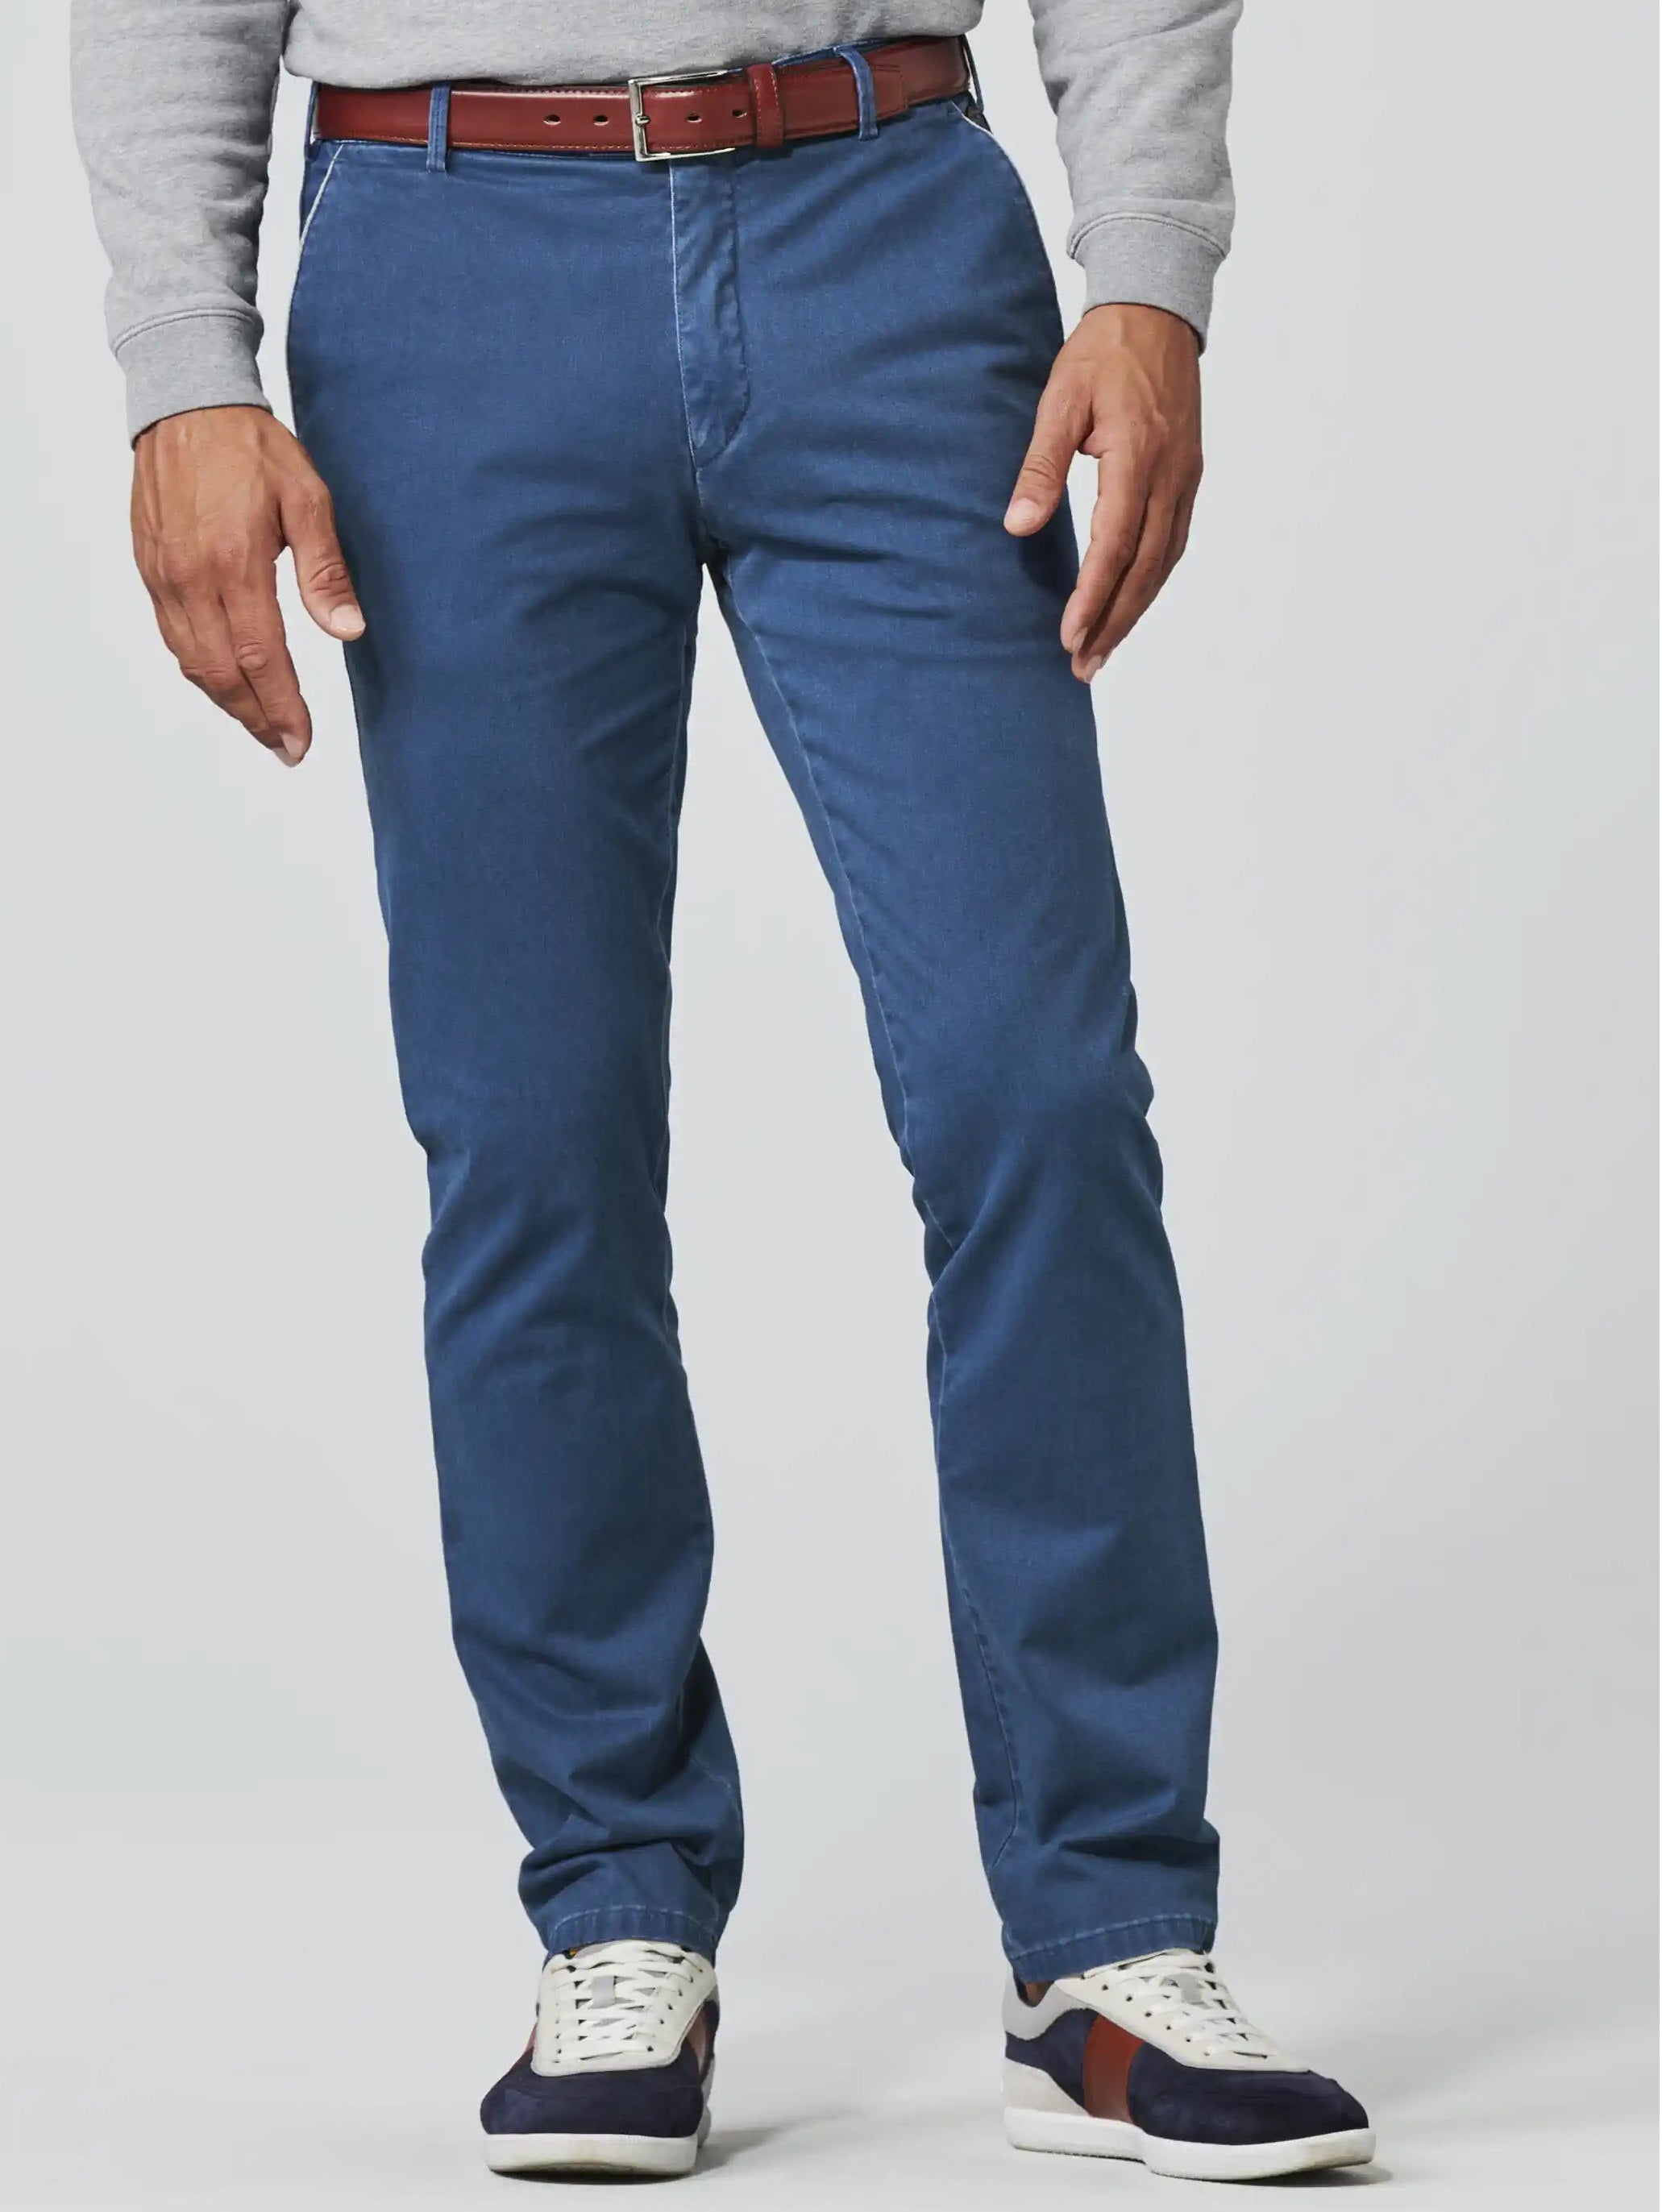 MEYER New York Trousers - 5000 Soft Twill Chino - Blue